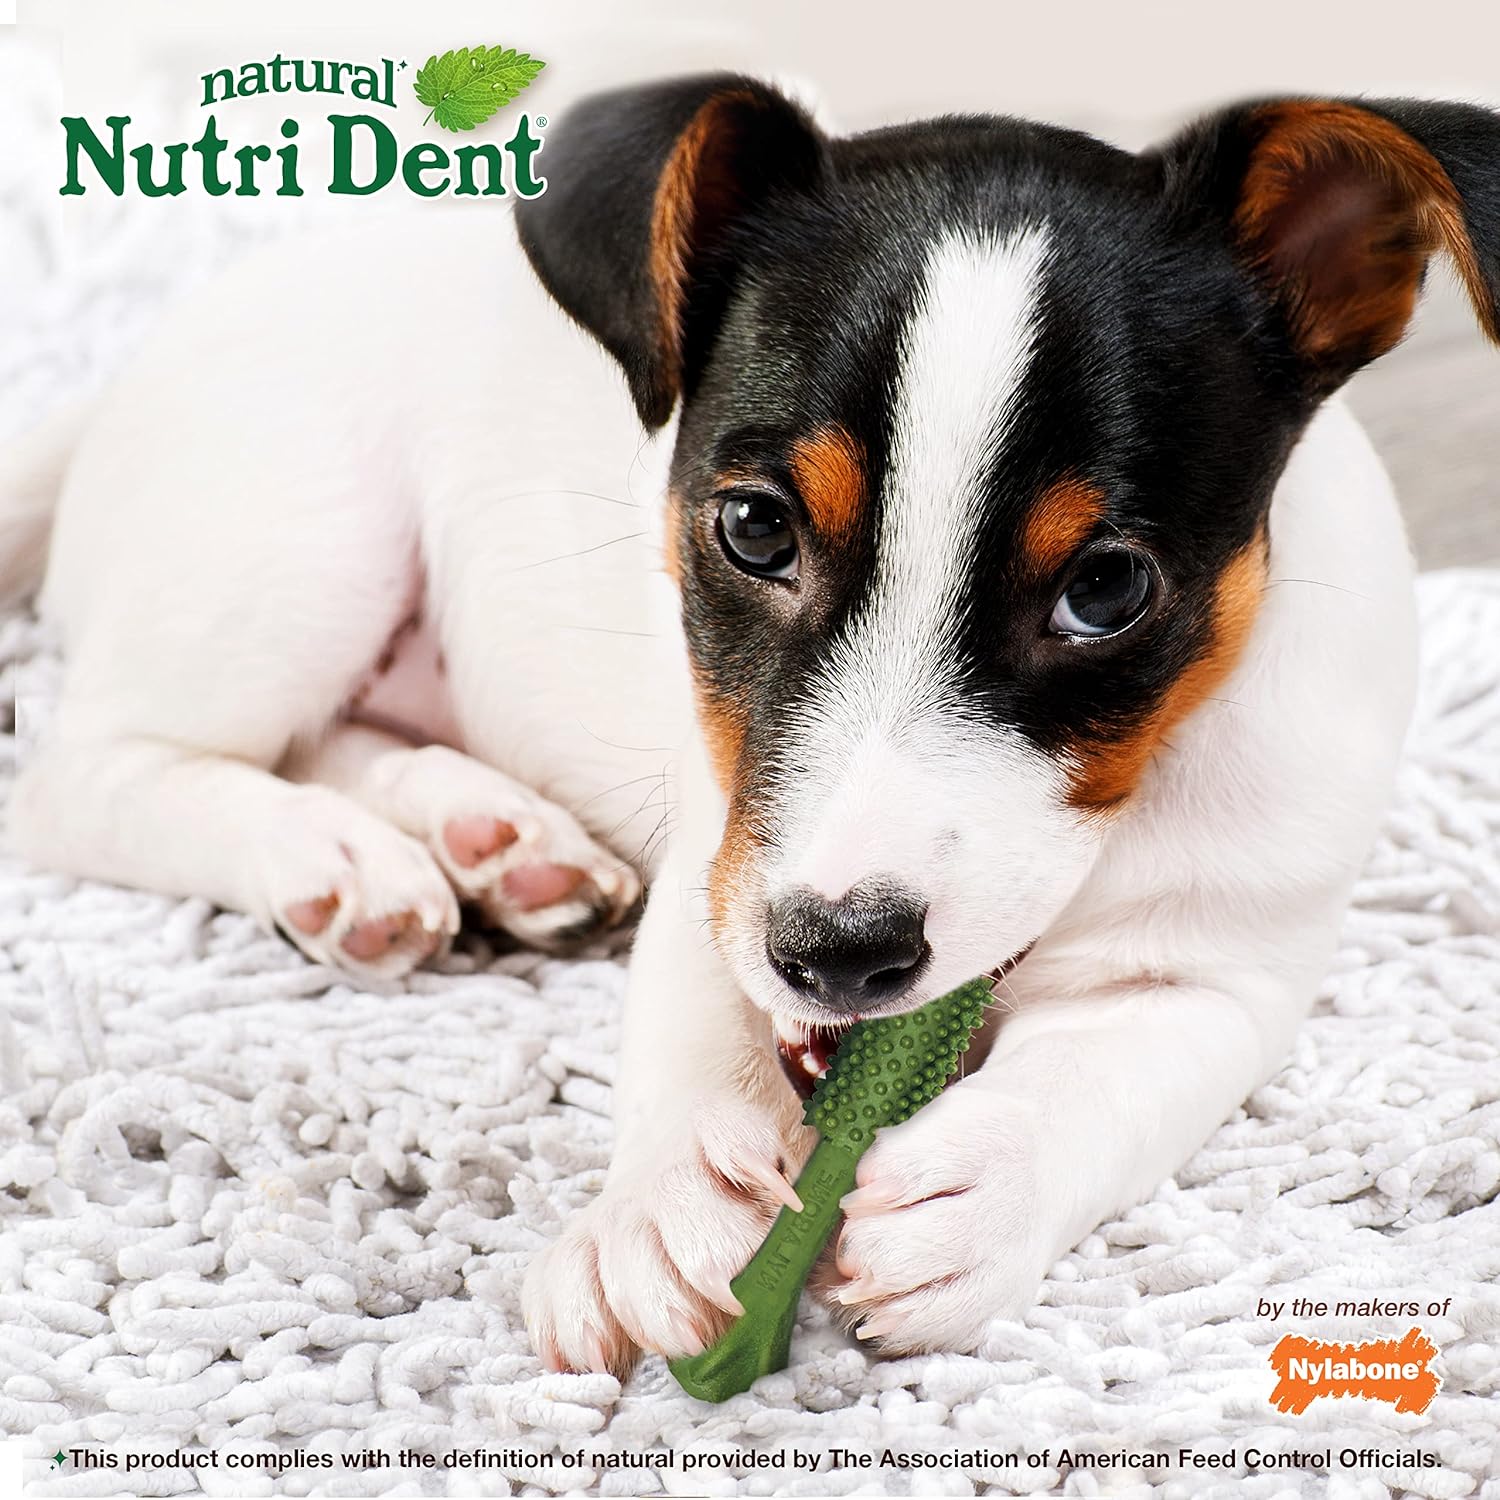 Nylabone Nutri Dent Dog Dental Chews - Natural Dog Teeth Cleaning & Breath Freshener - Dental Treats for Dogs - Fresh Breath Flavor, Small (64 Count)